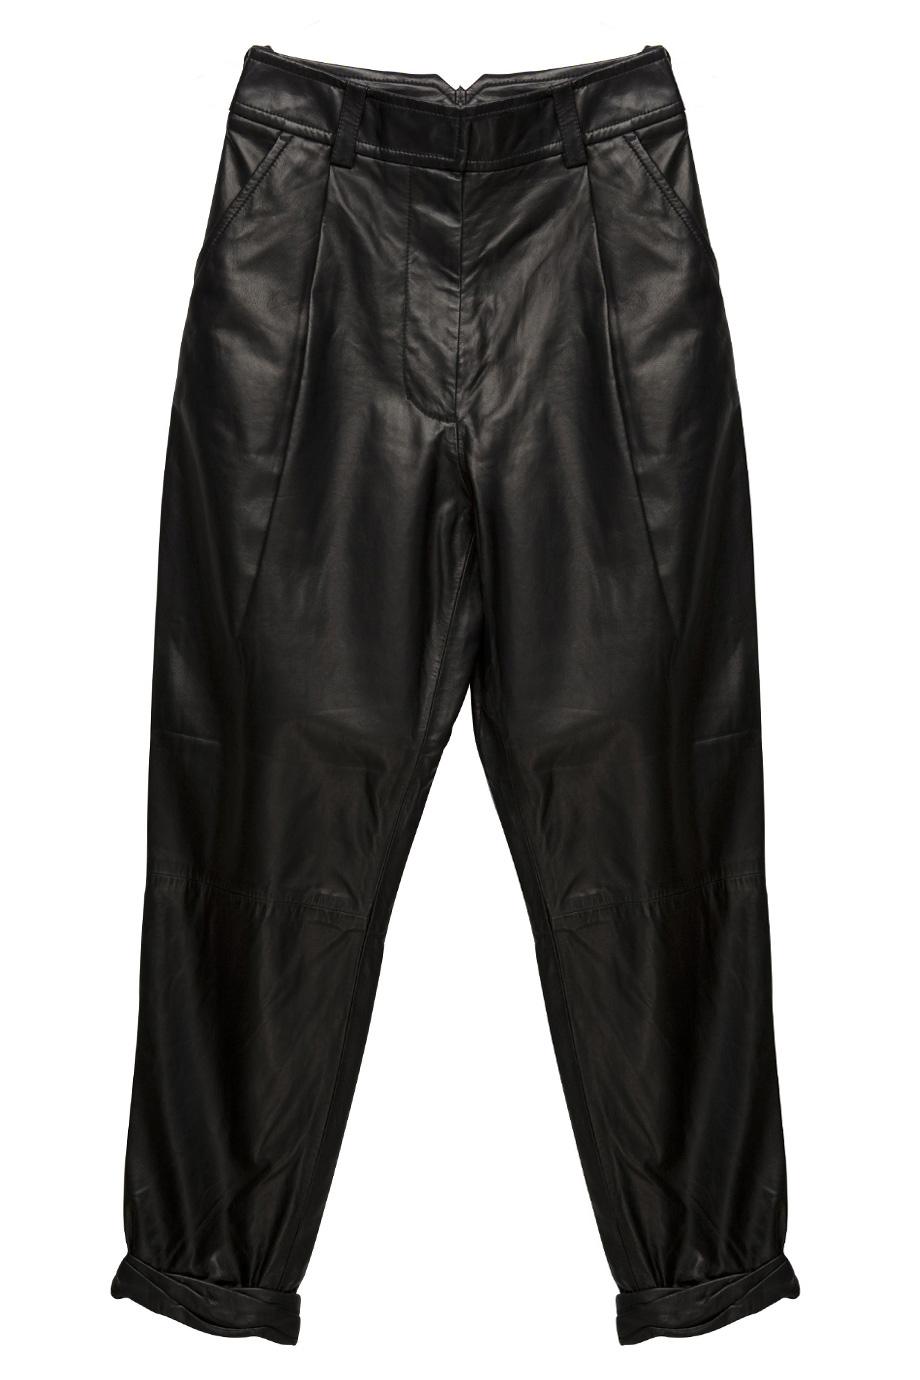 3.1 Phillip Lim Leather Harem Pants in Black | Lyst